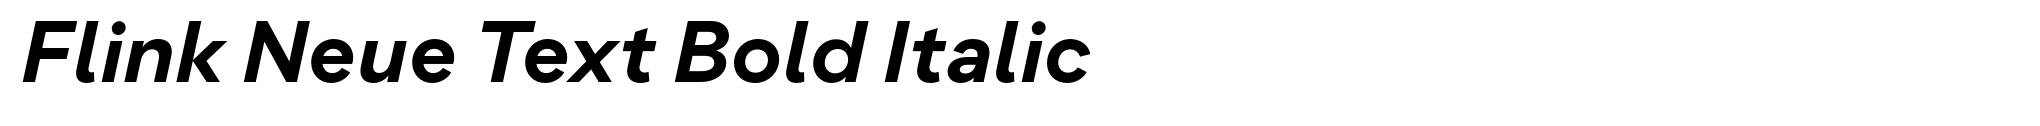 Flink Neue Text Bold Italic image